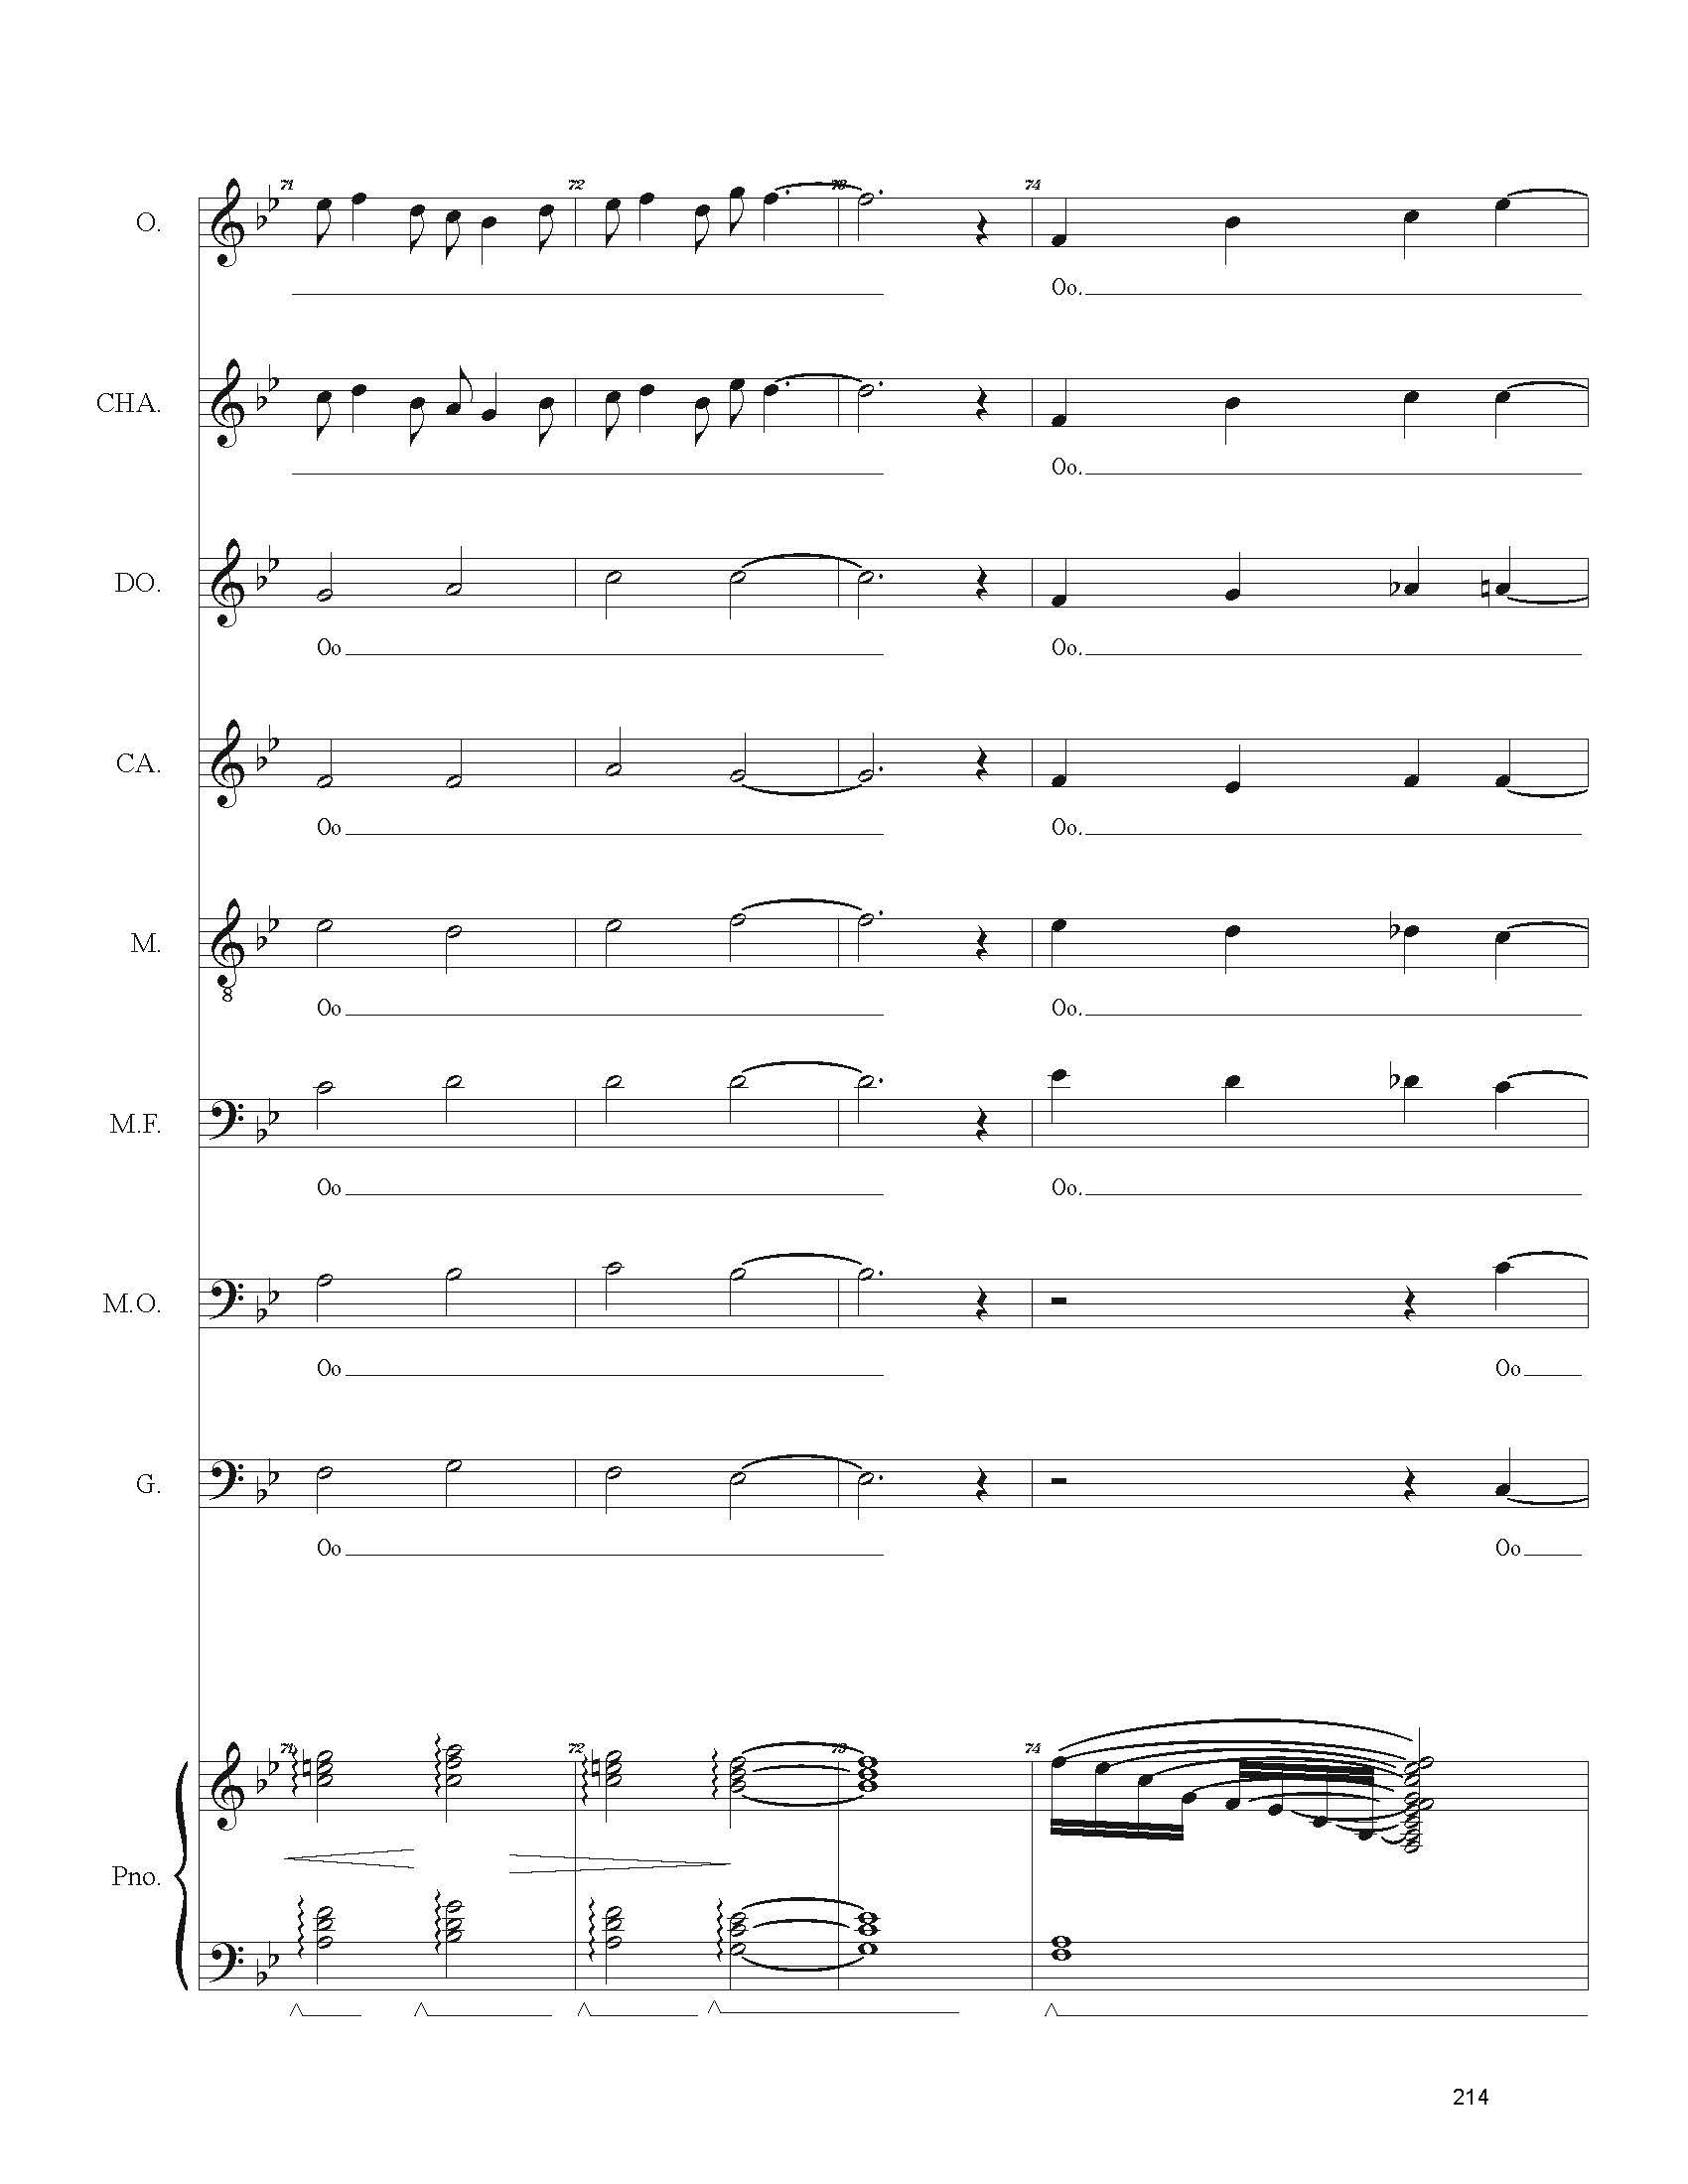 FULL PIANO VOCAL SCORE DRAFT 1 - Score_Page_214.jpg